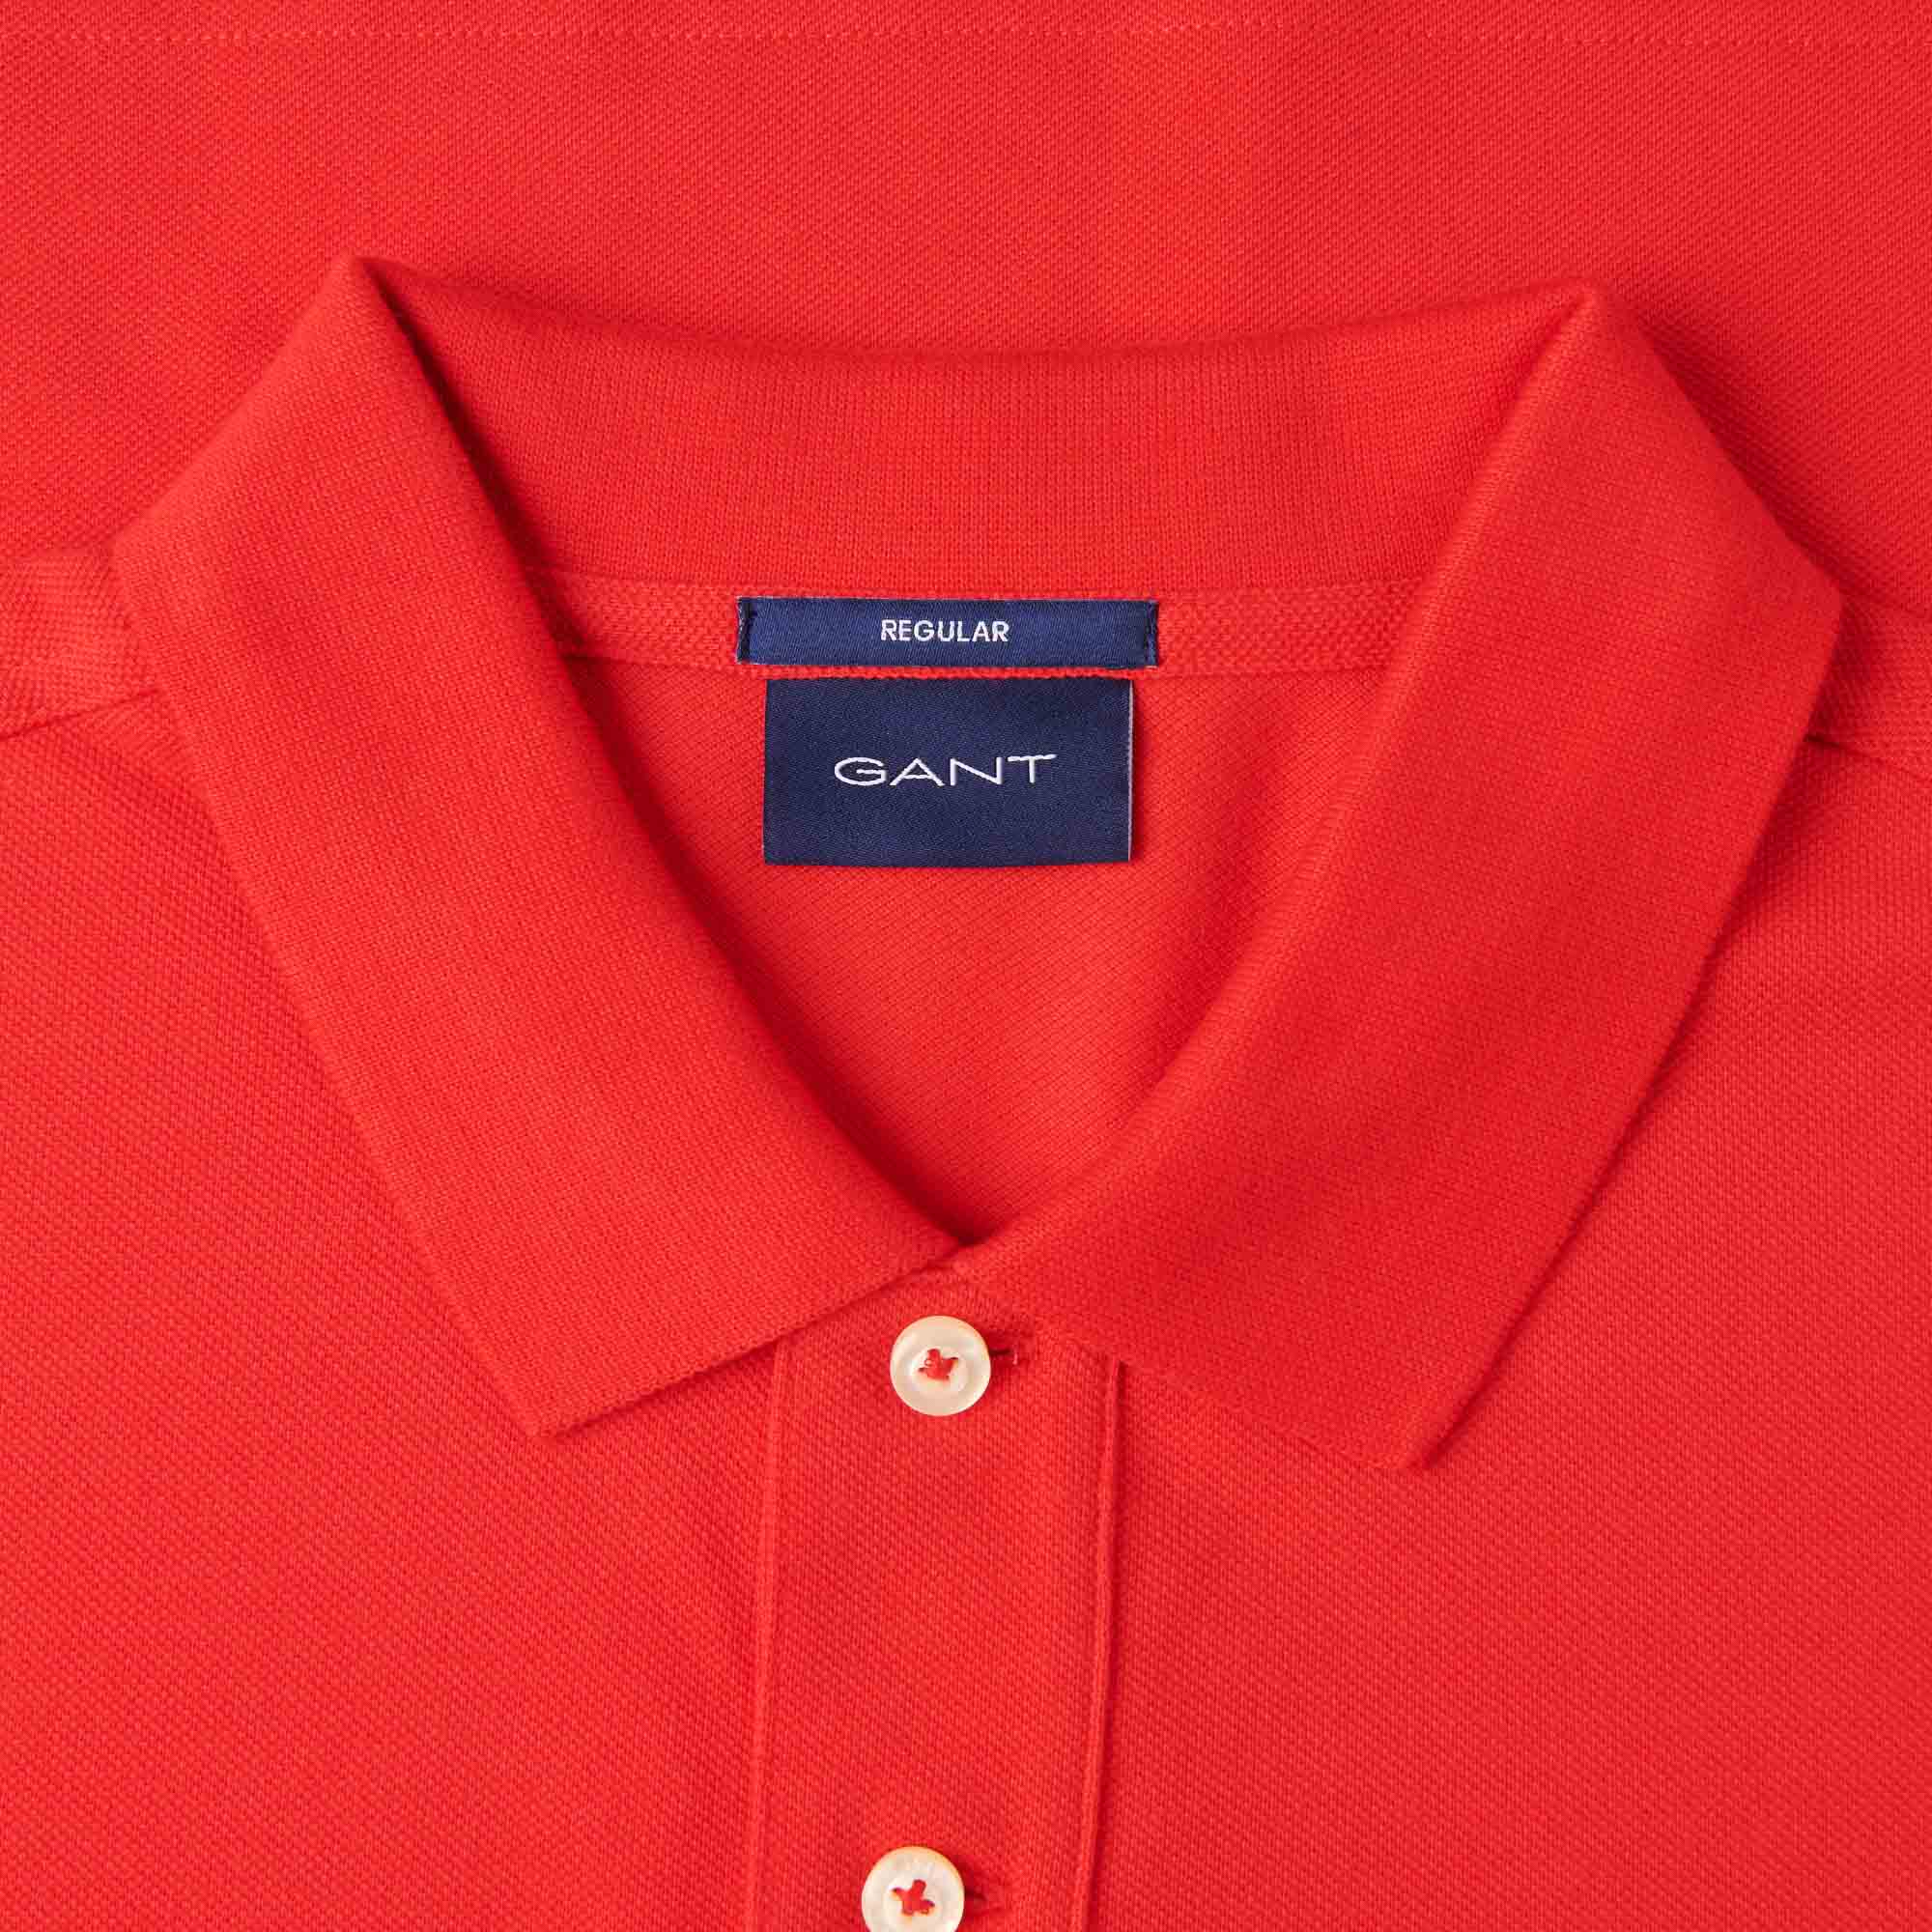 GANT Original Polo Shirt - Bright Red - Pennyroyal Sports